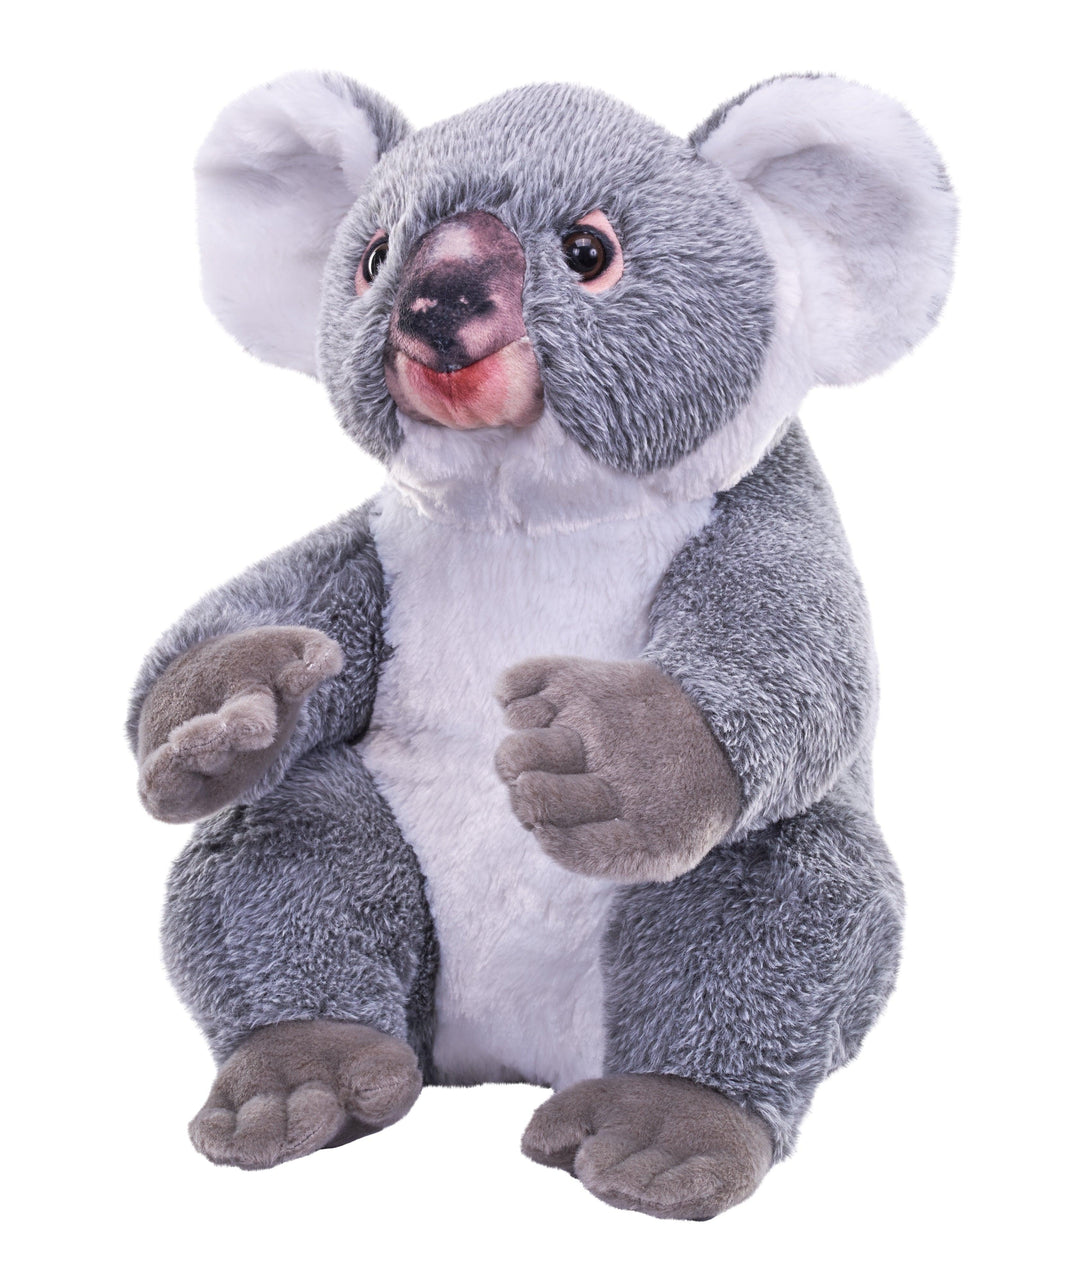 Hudson the Koala - Nana's Weighted Blankets